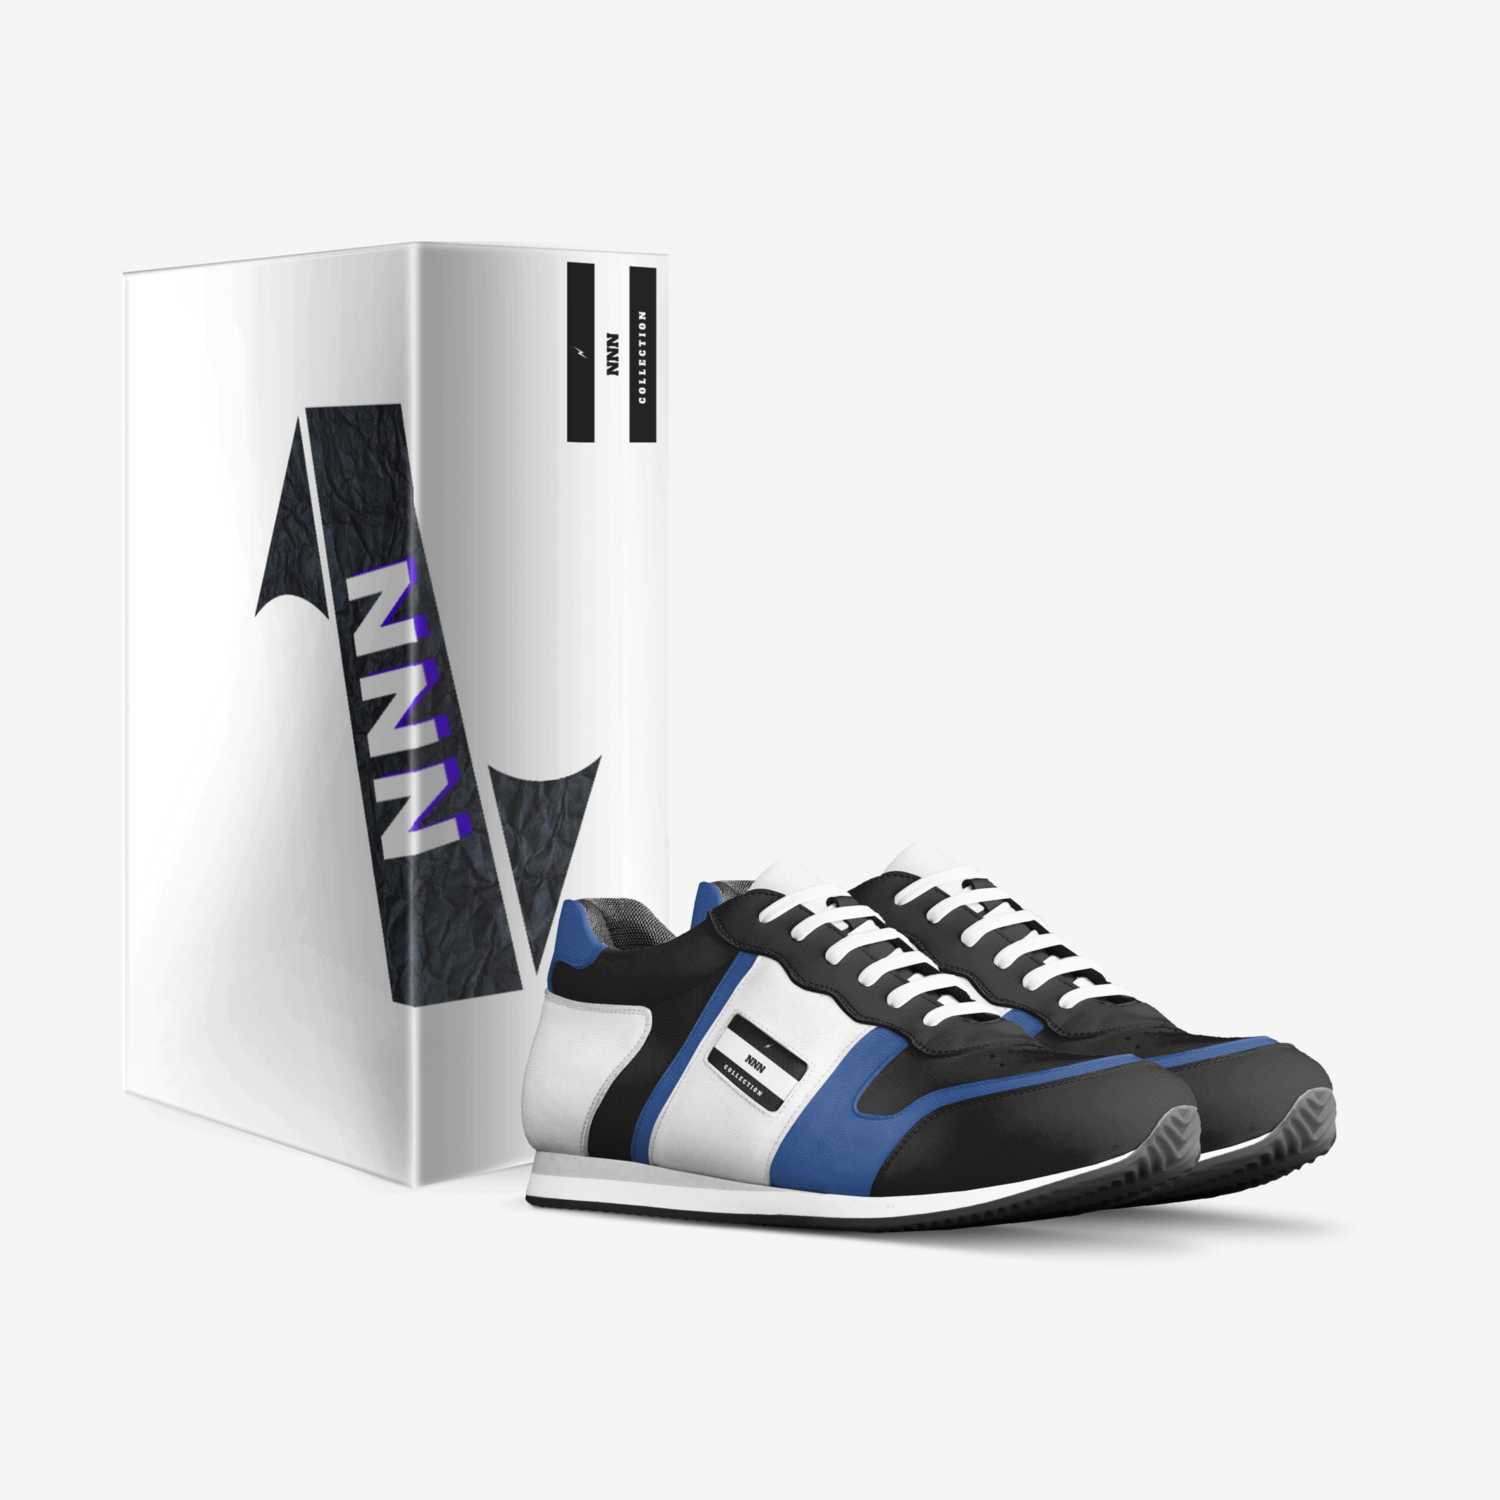 NNN custom made in Italy shoes by Nicholas Lemoine | Box view